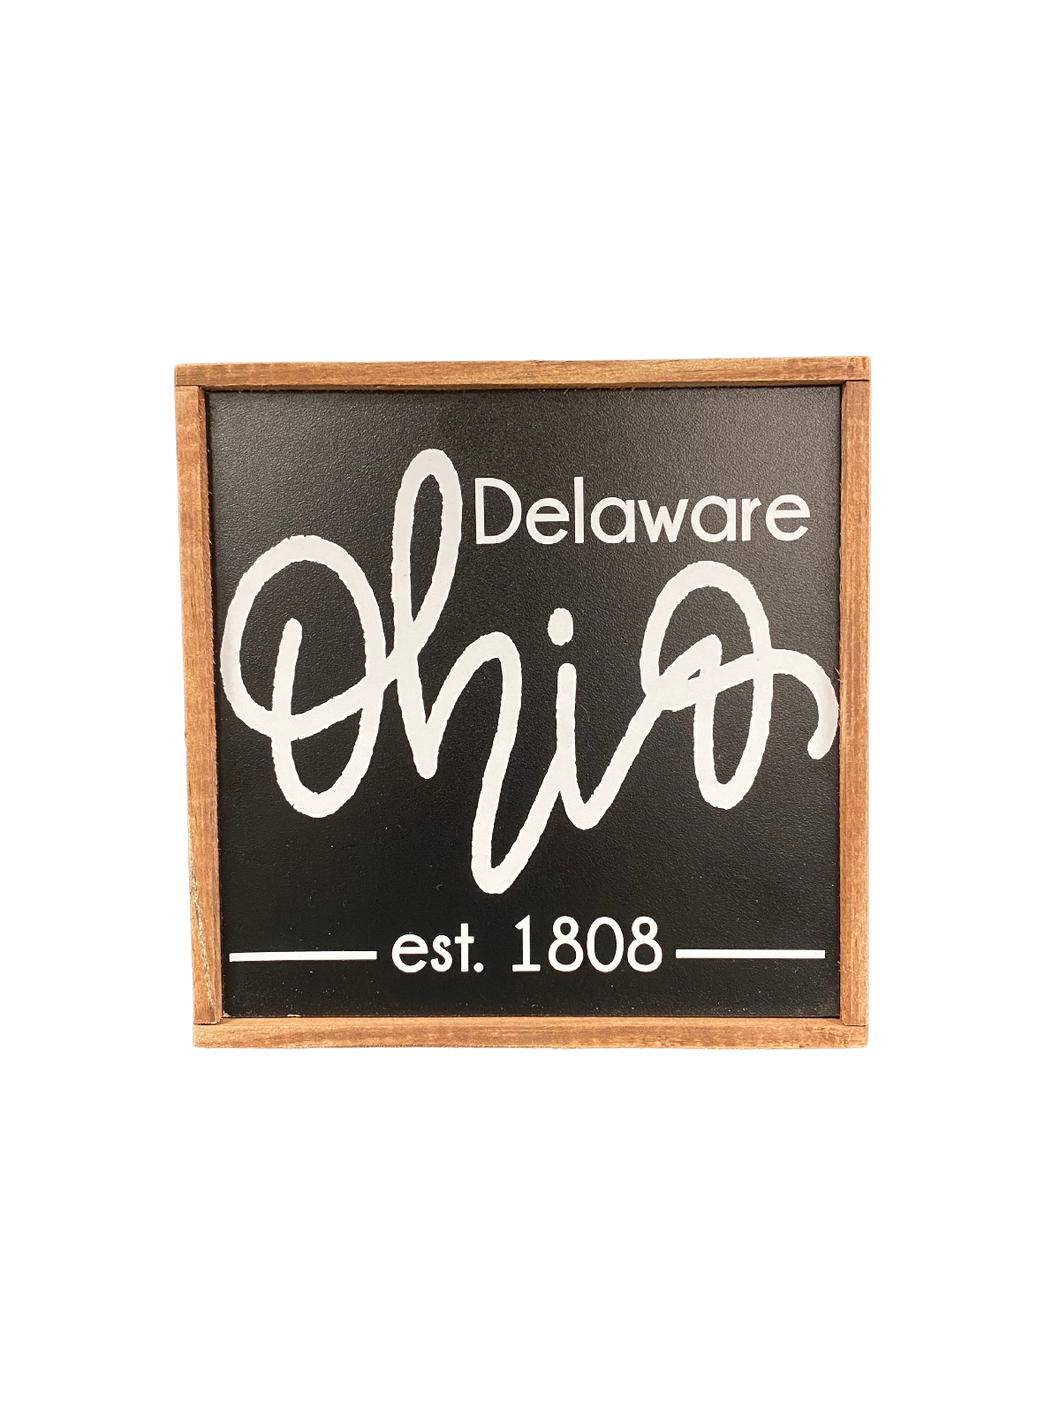 Delaware, Ohio Est. 1808 Sign